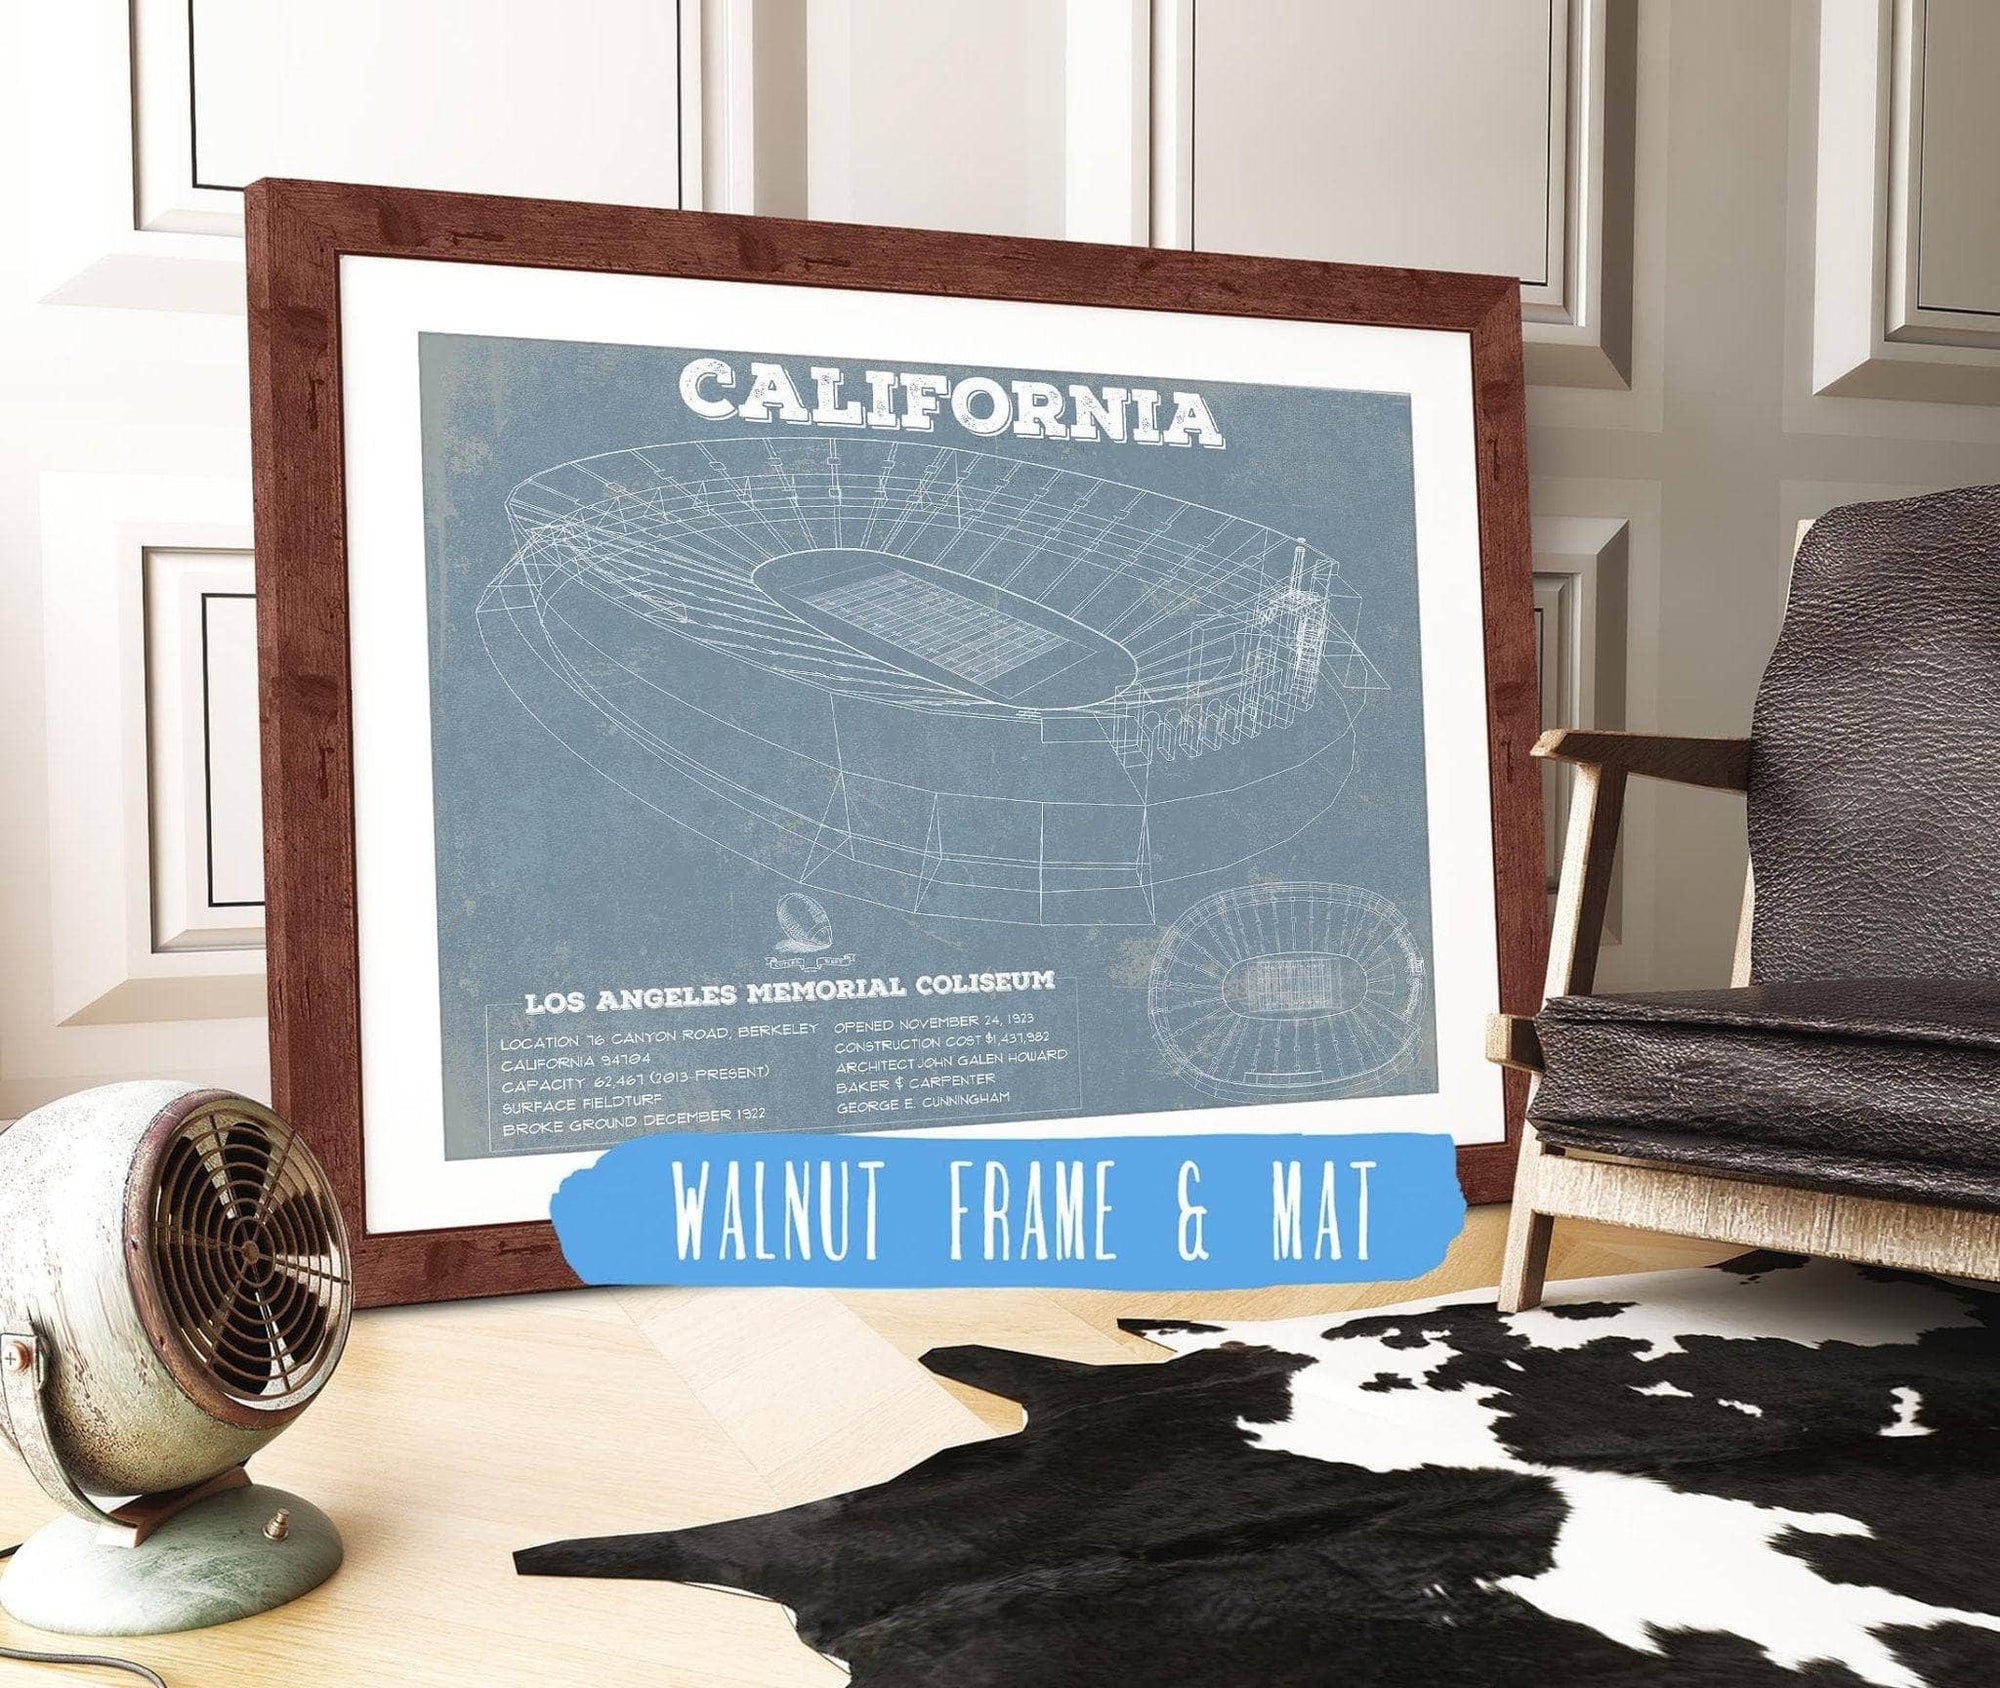 Cutler West College Football Collection 14" x 11" / Walnut Frame & Mat California Memorial Stadium Art - University of California Bears Vintage Stadium & Blueprint Art Print 653756595_45177